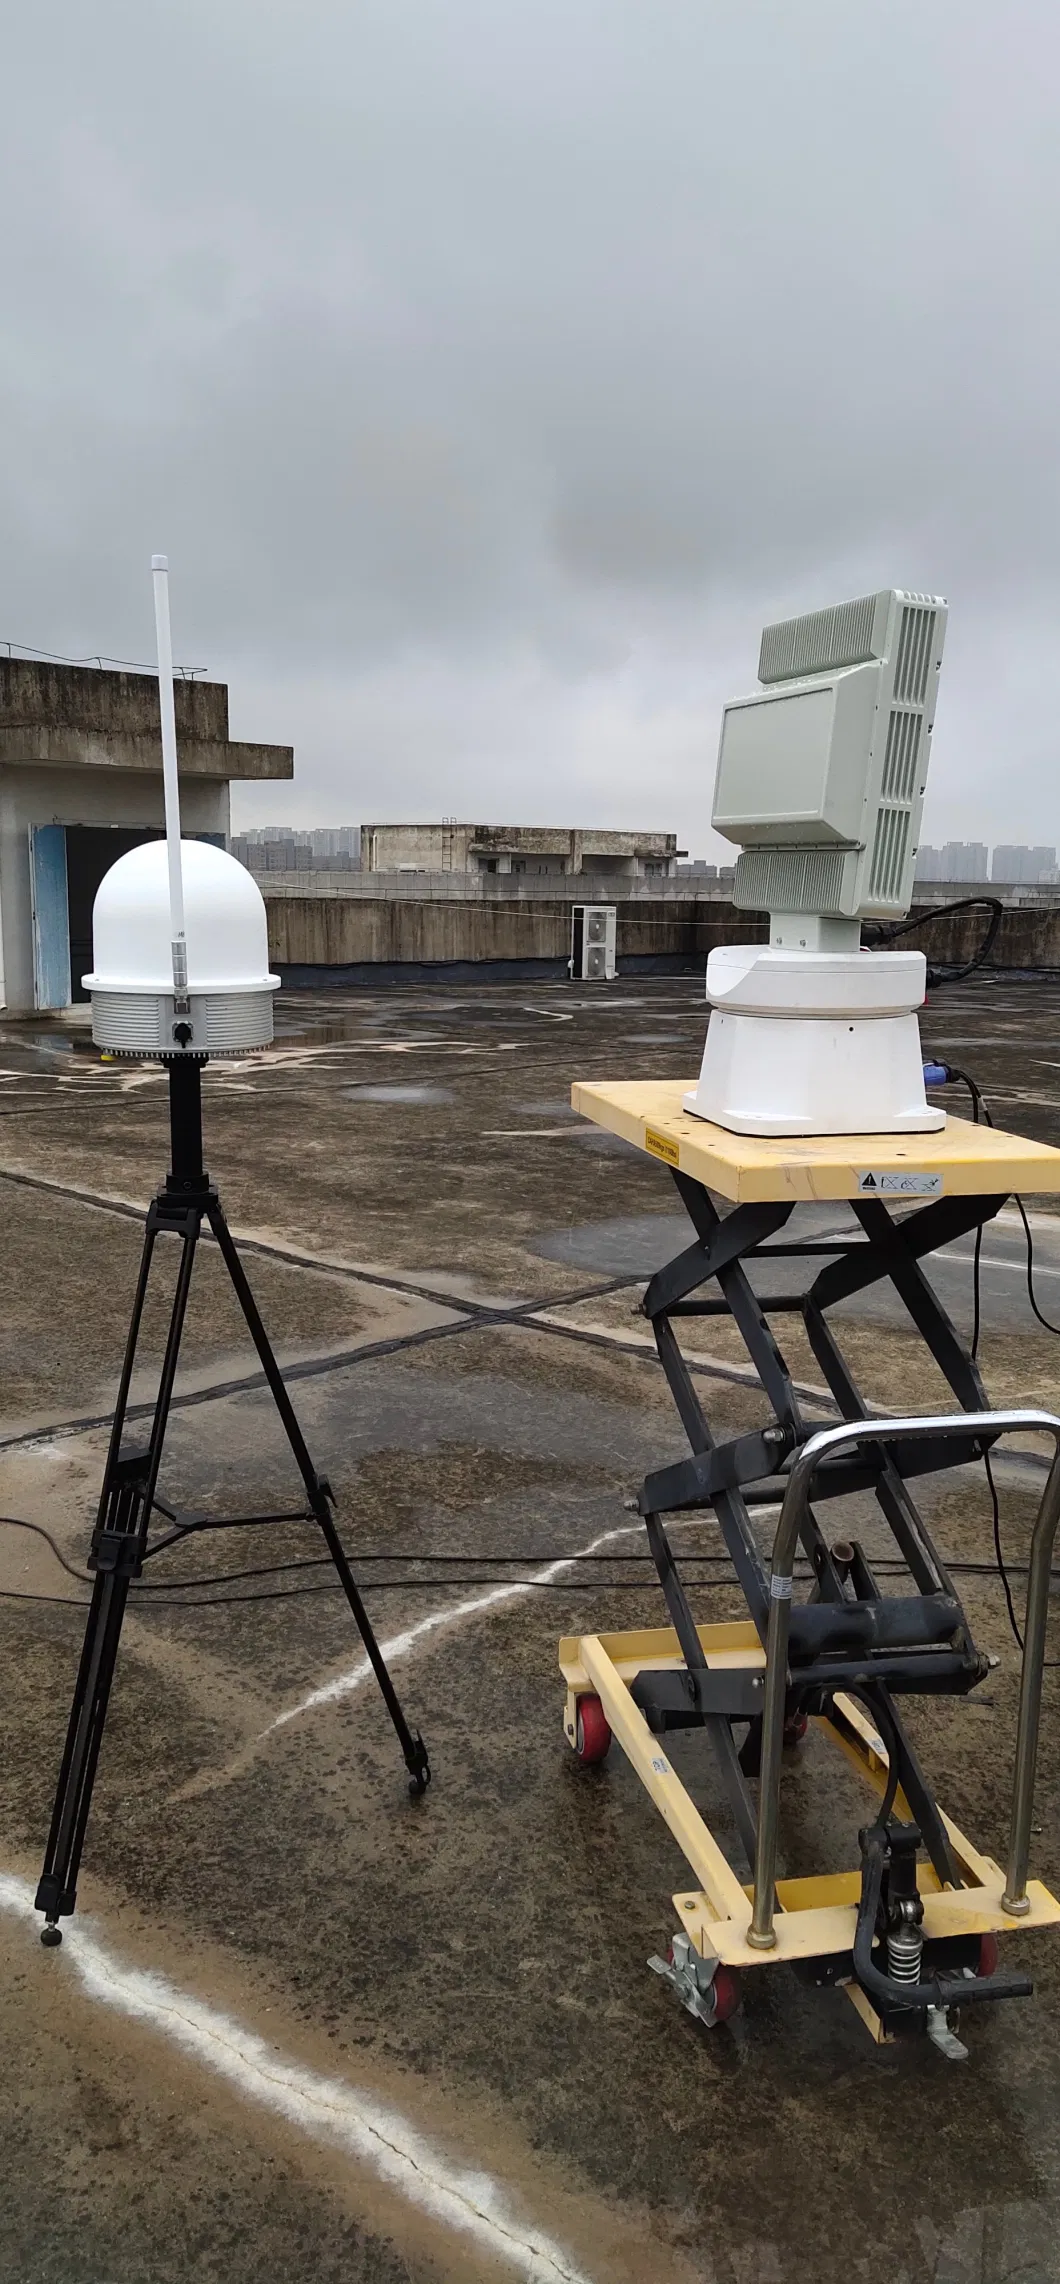 Radar Coastal Surveillance System for Ground Based and Air Surveillance Based Surveillance and Security